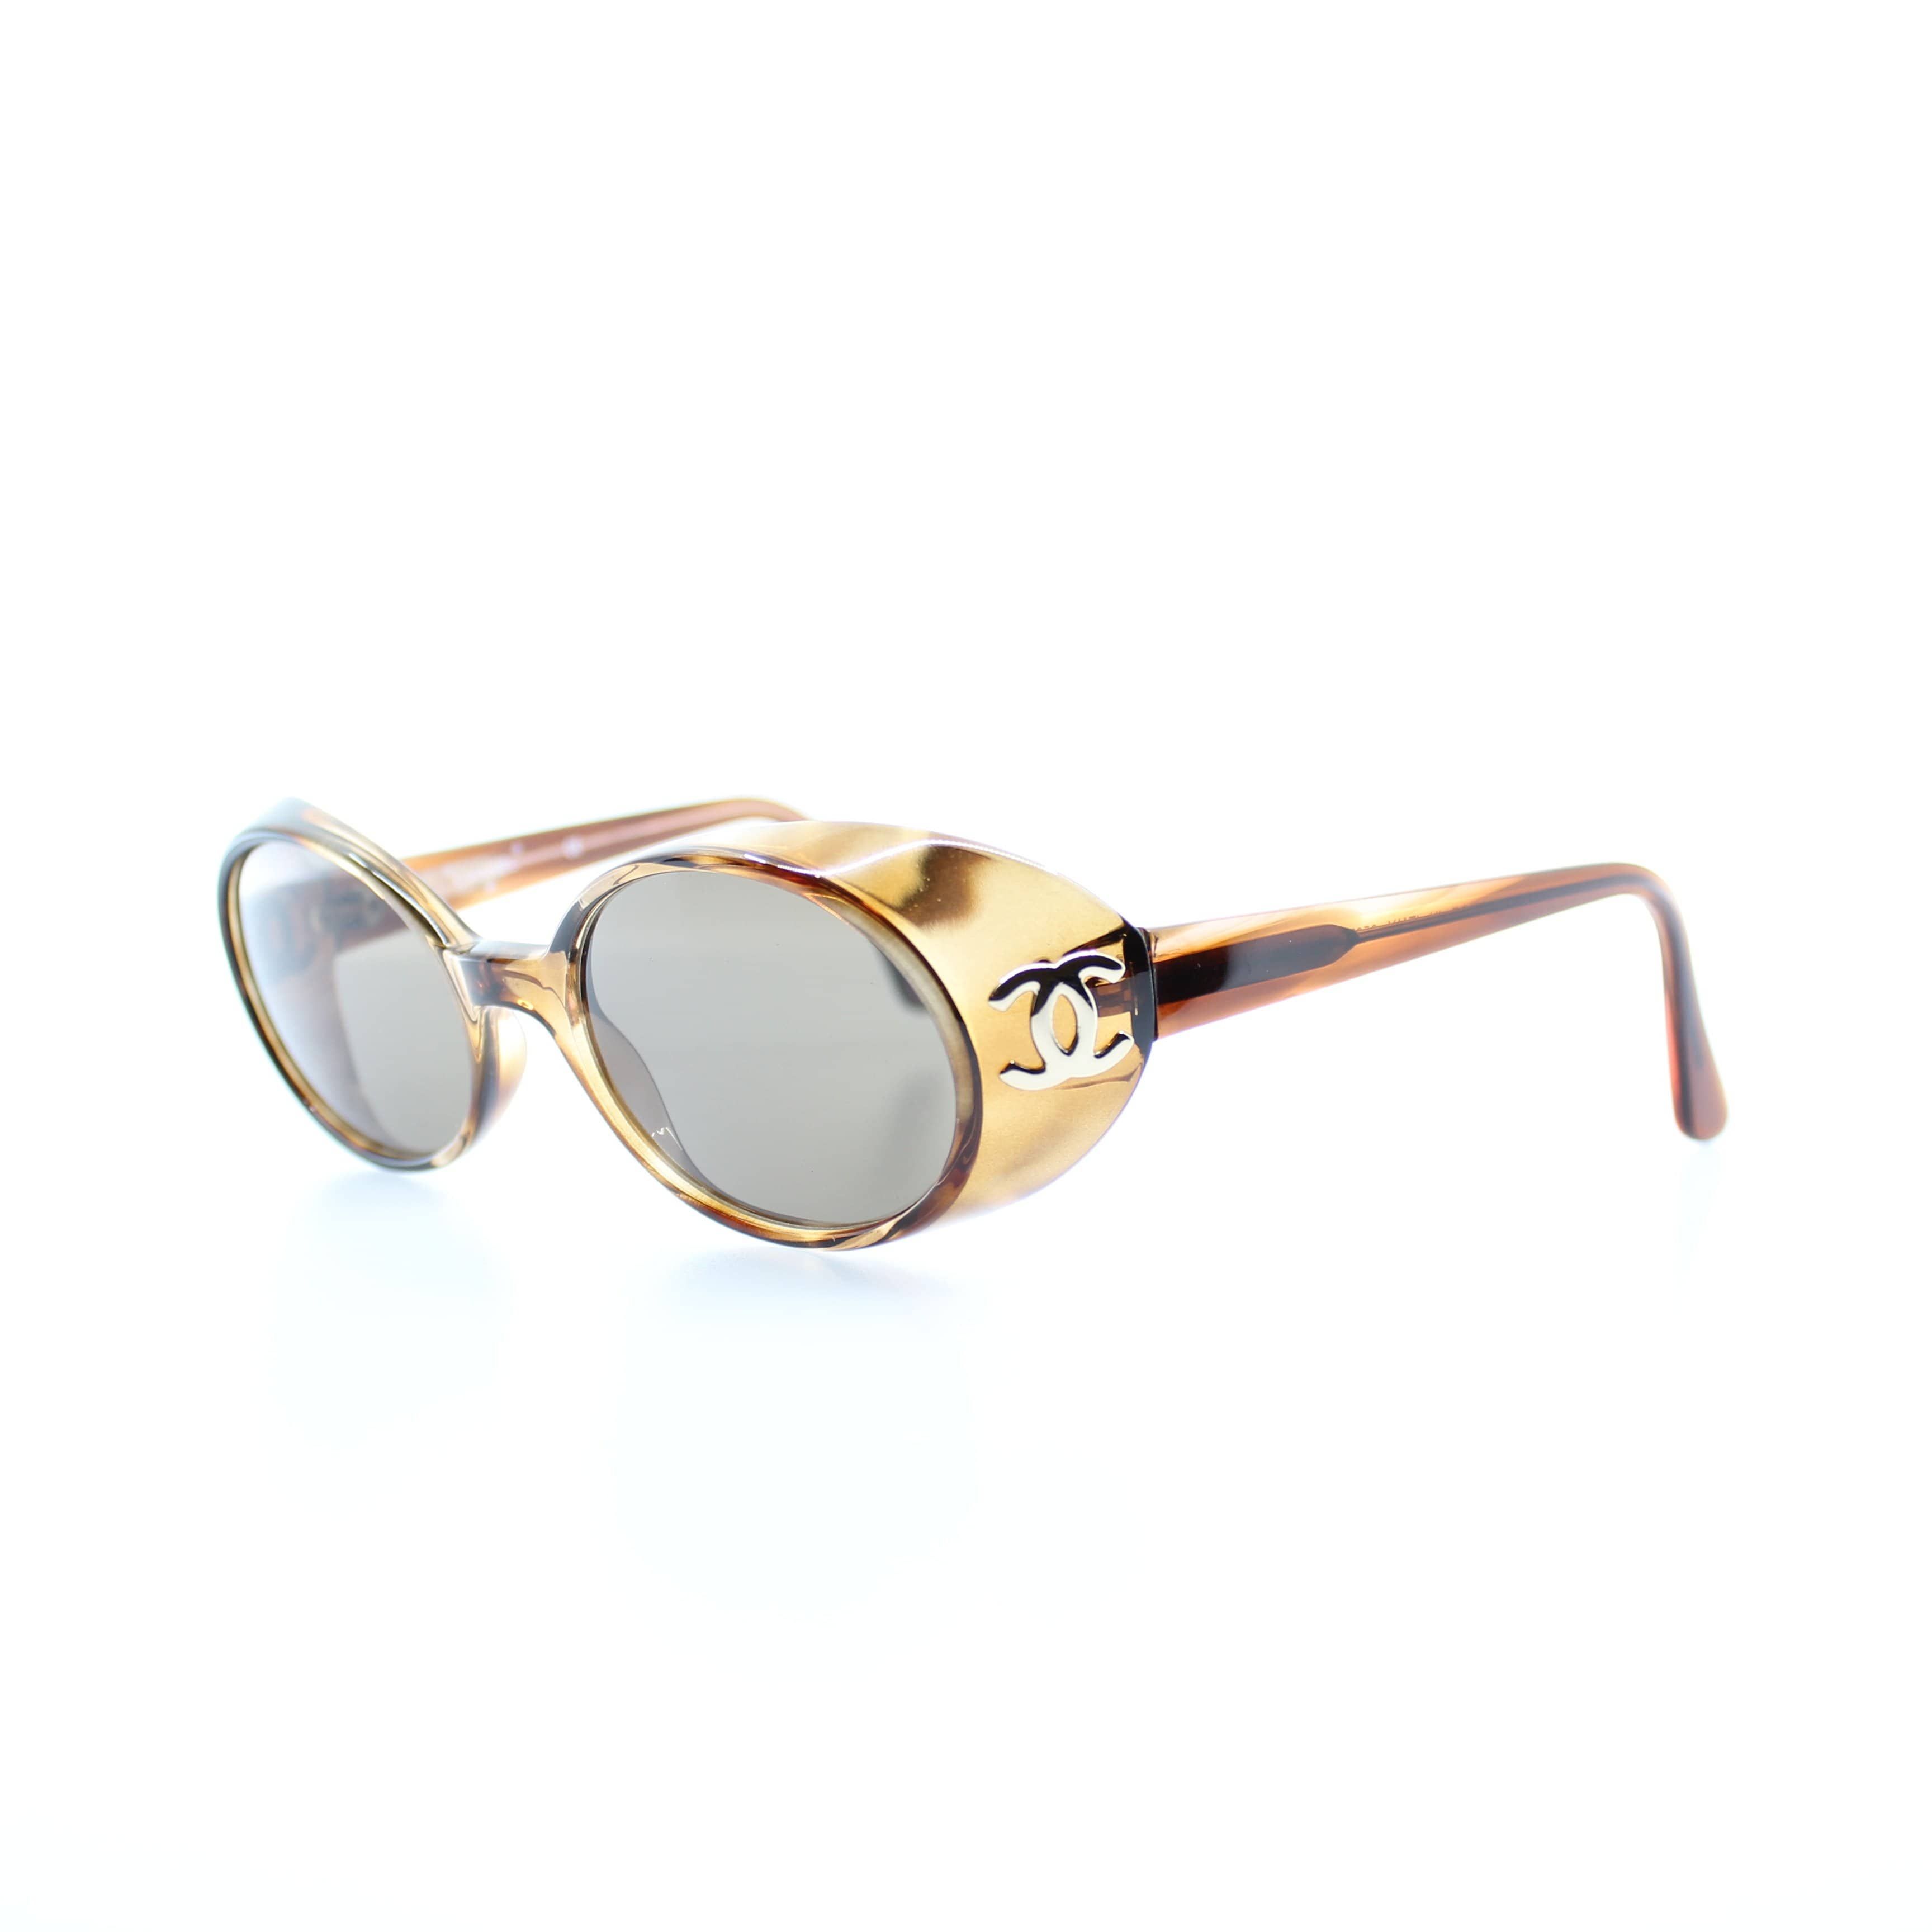 Chanel - Vintage Chanel Sunglasses on Designer Wardrobe